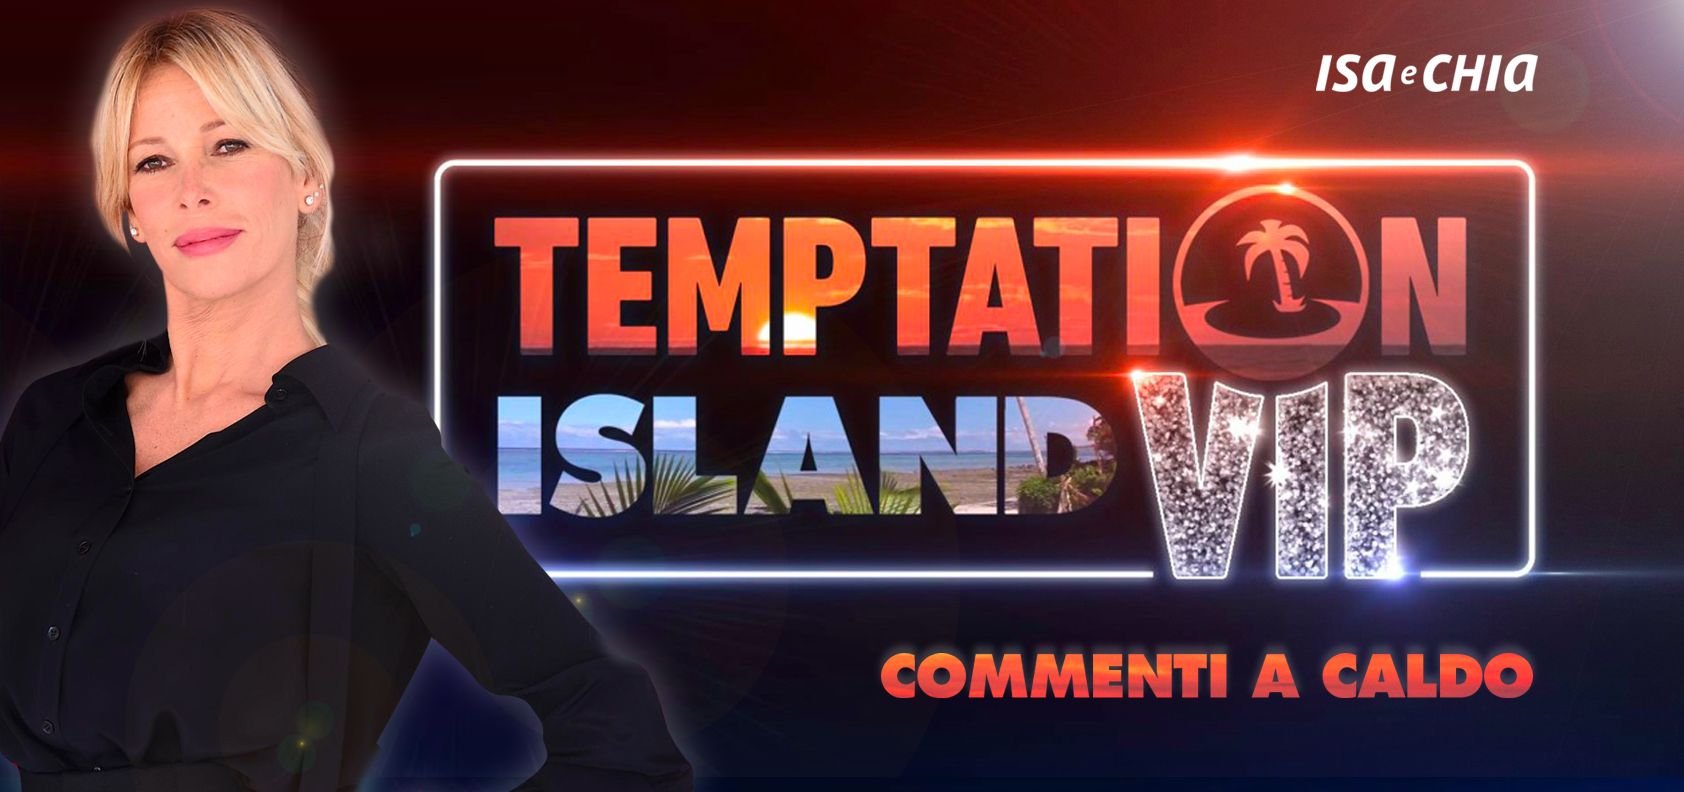 ‘Temptation Island Vip 2’, quarta puntata: commenti a caldo